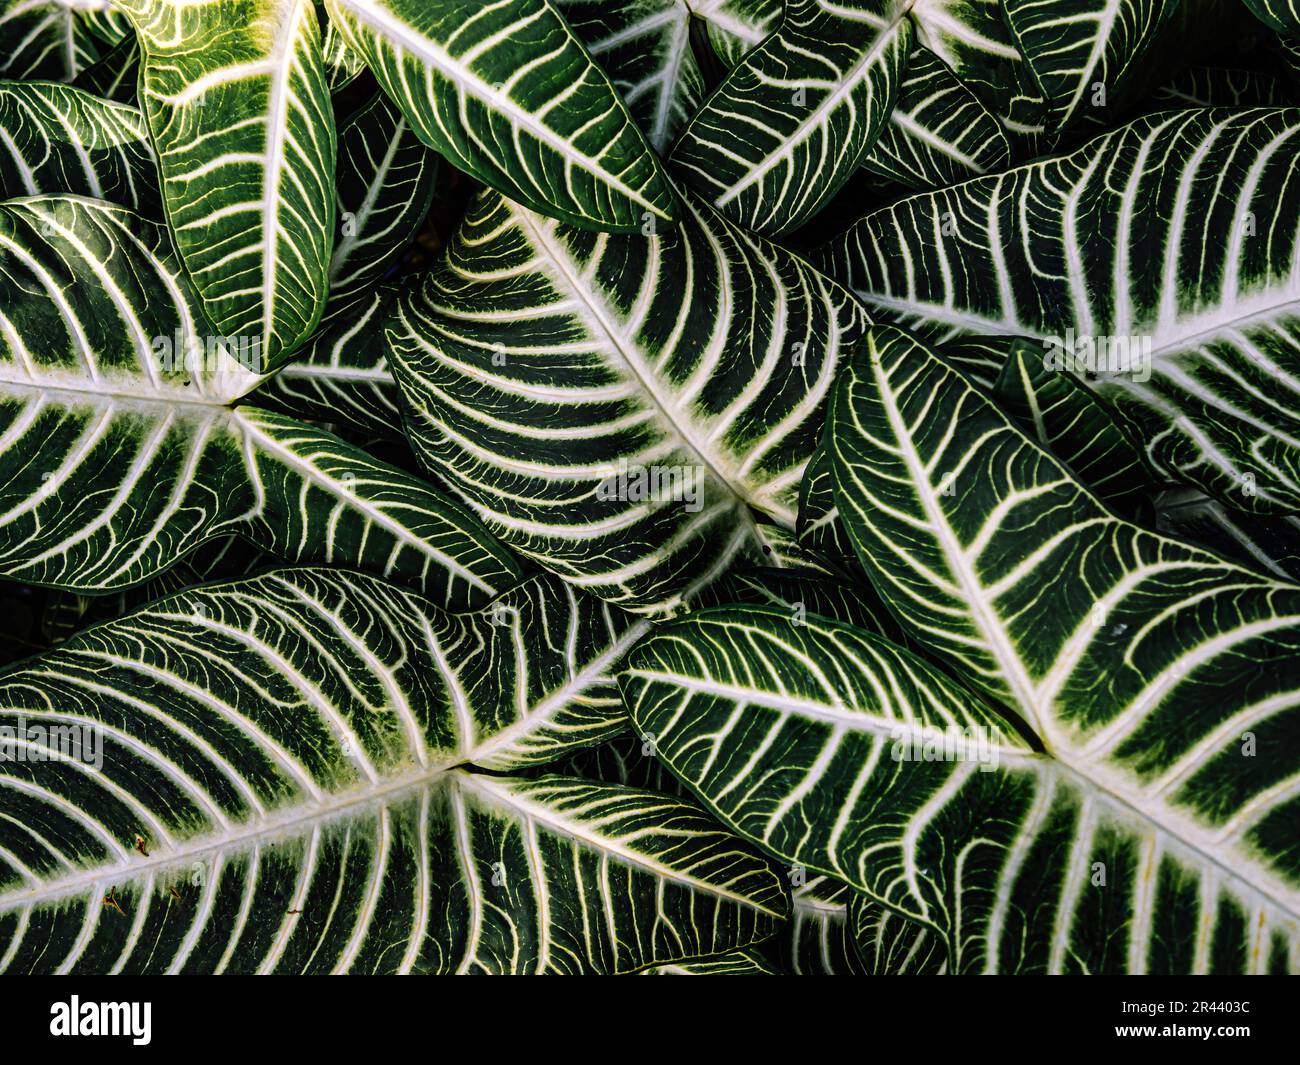 Green leaves, Caladium lindenii Stock Photo